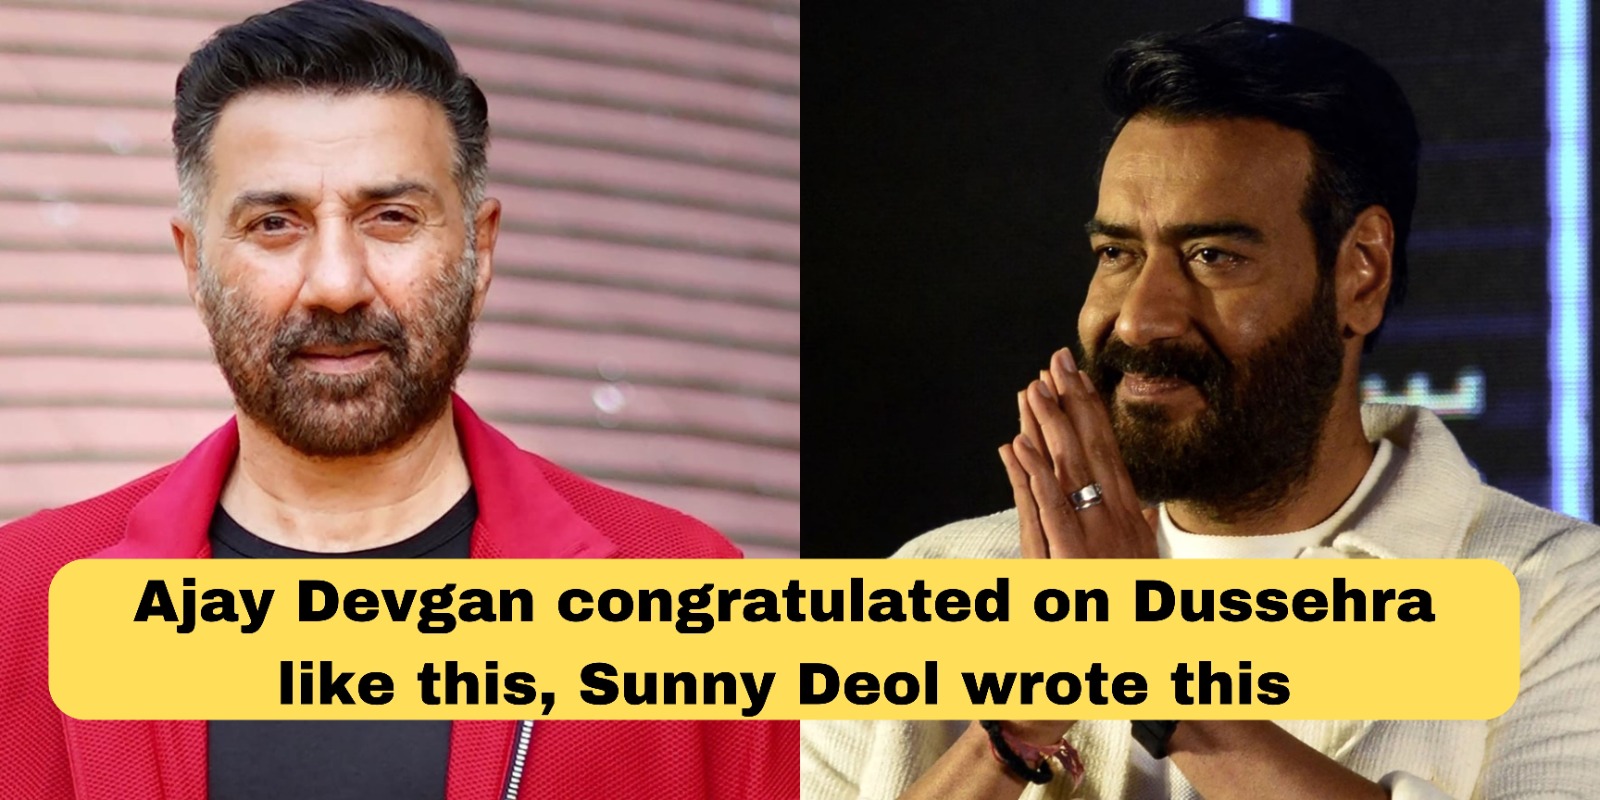 Ajay Devgan congratulated on Dussehra